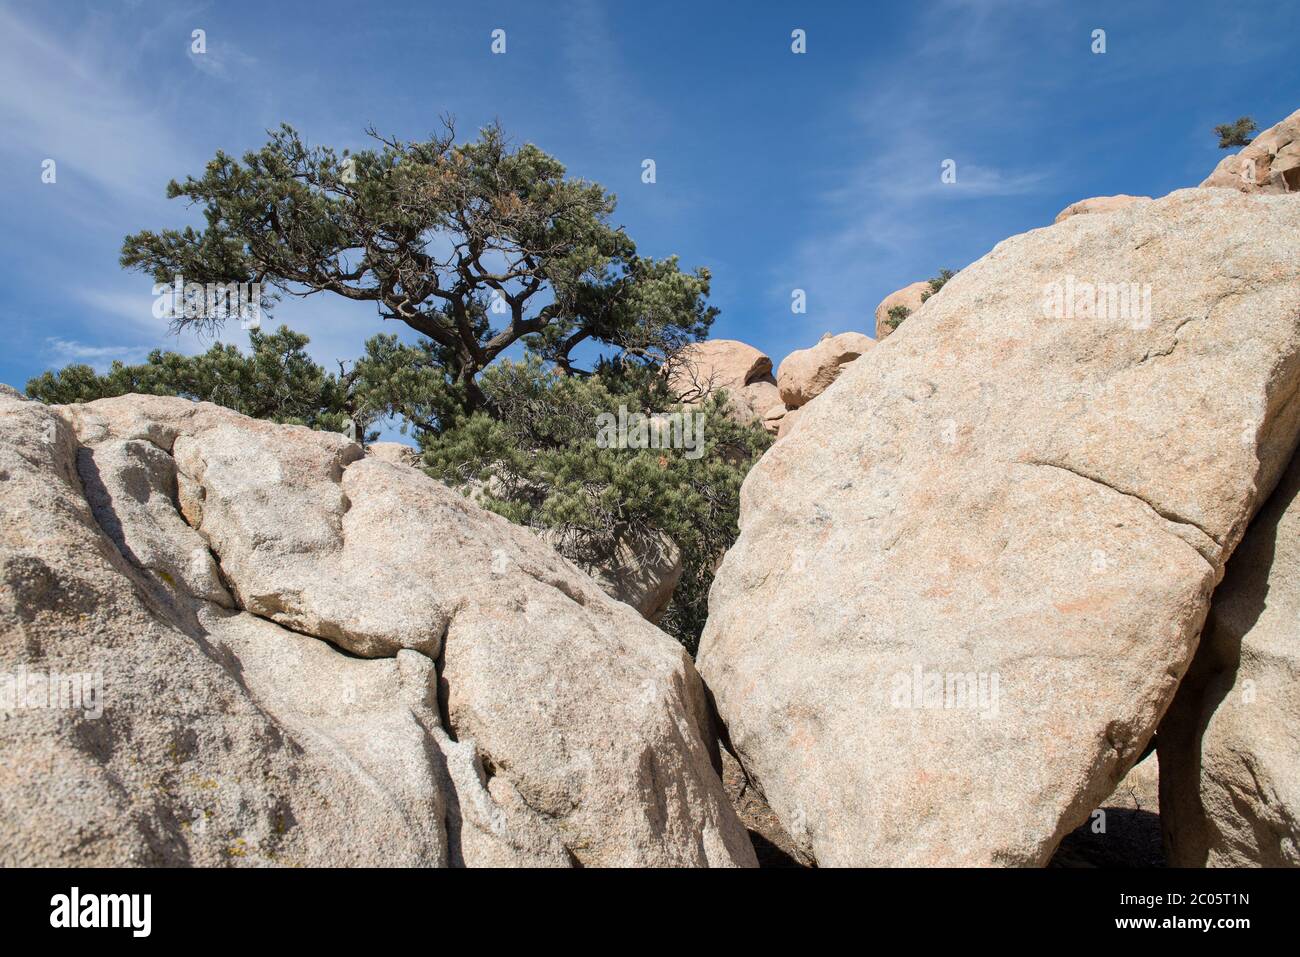 Plants and rocks in the Baja California Desert, near la rumorosa, Mexican landscape Stock Photo